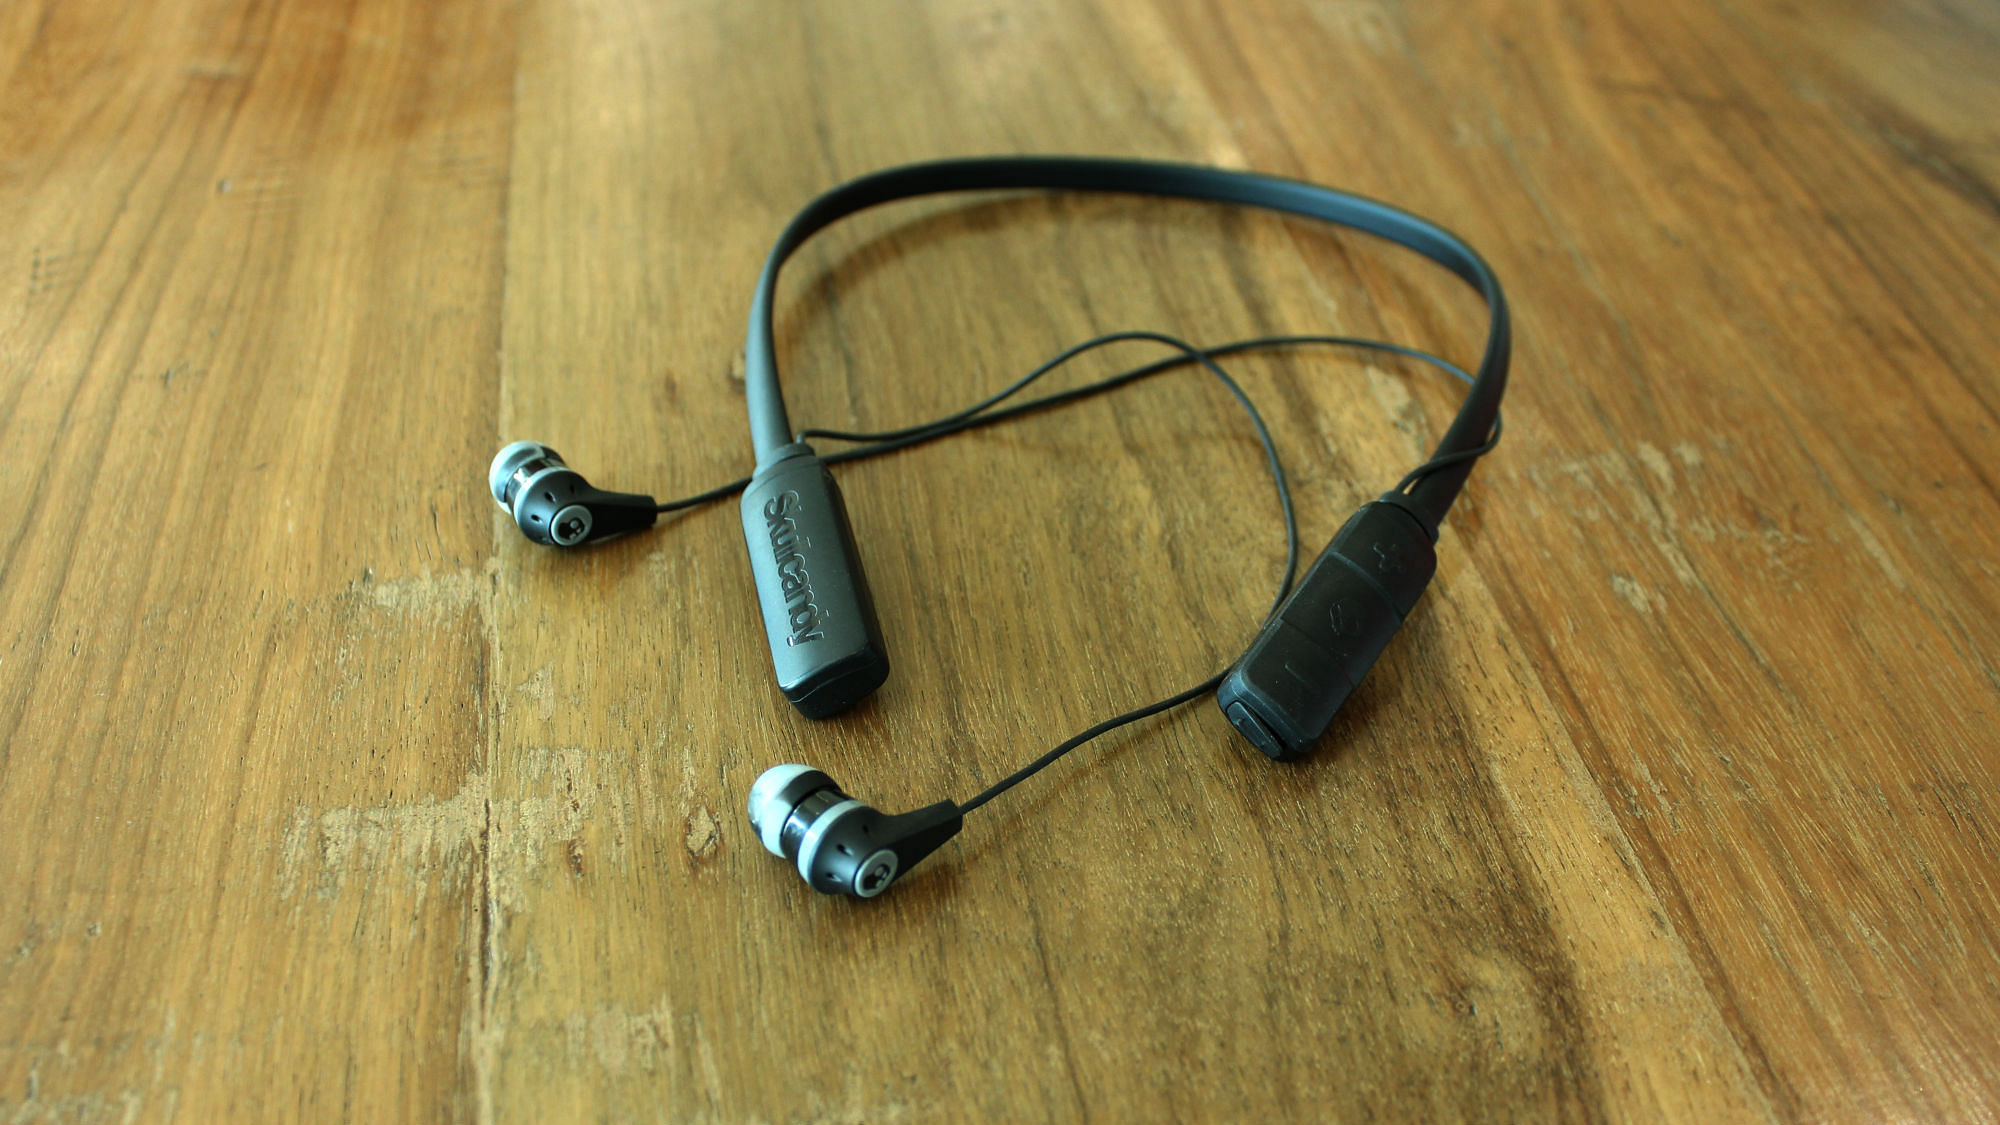 The Skullcandy Ink’d Wireless headphone. (Photo: <b>The Quint</b>)